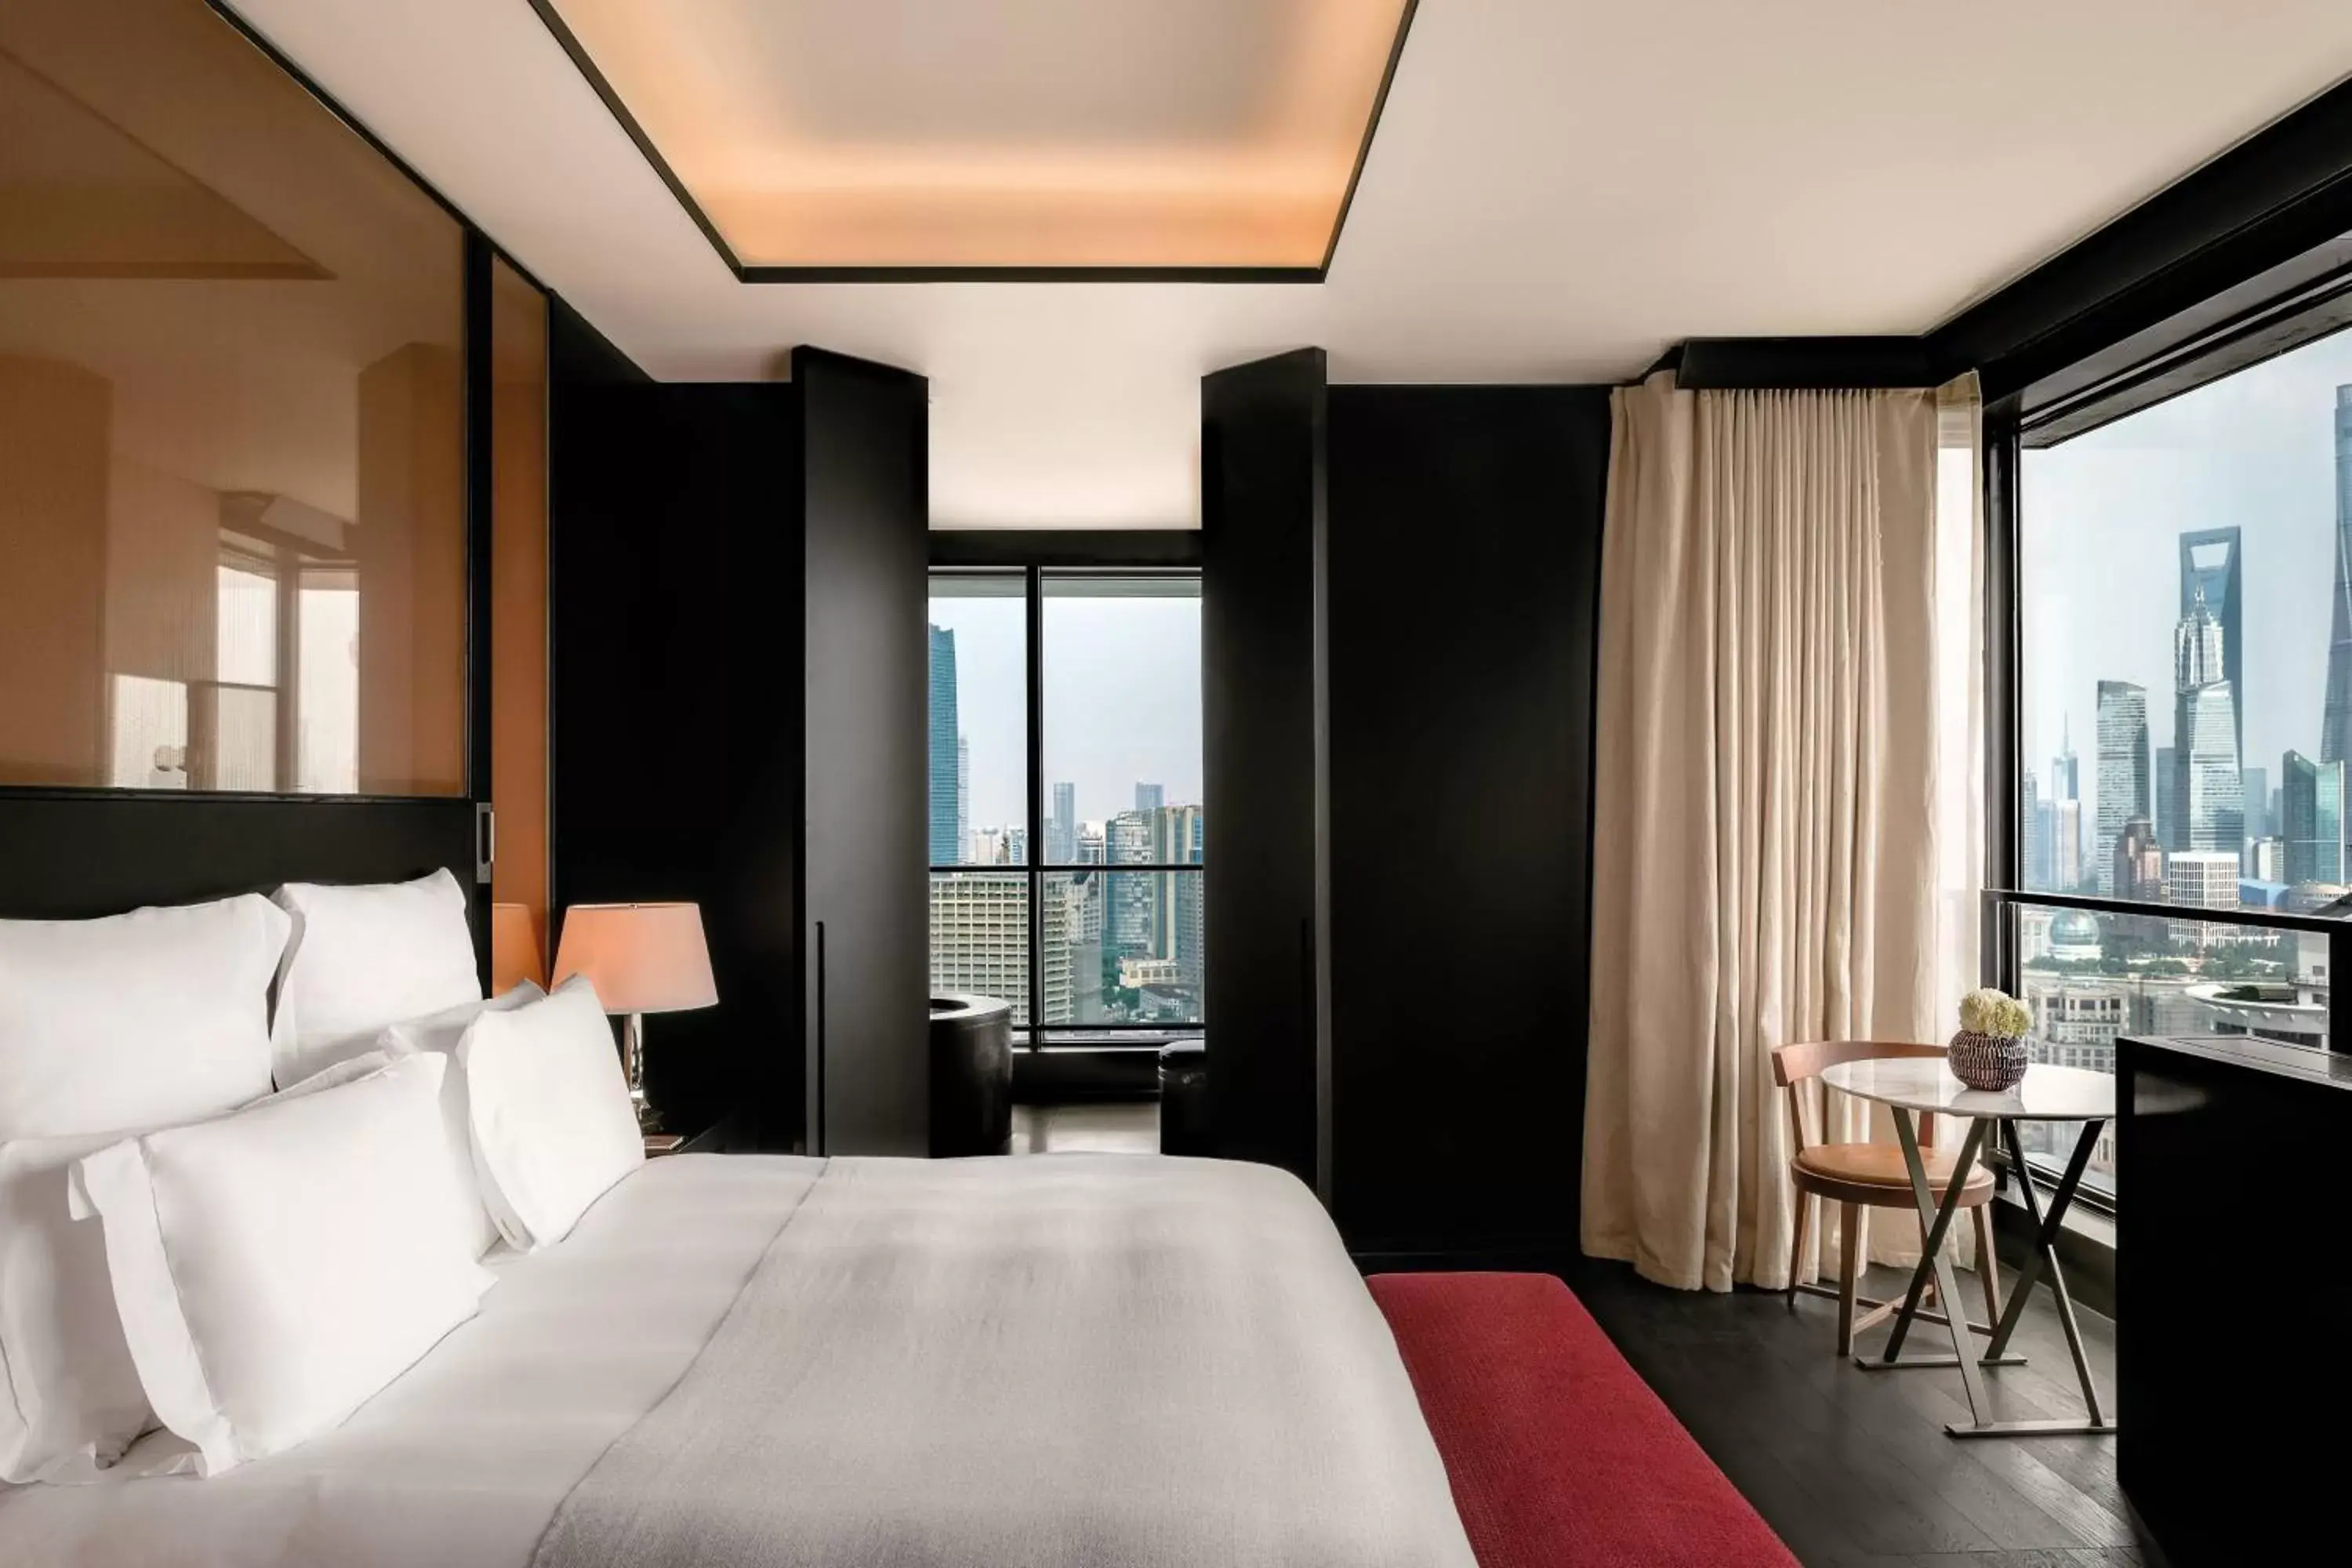 Bedroom in Bulgari Hotel Shanghai